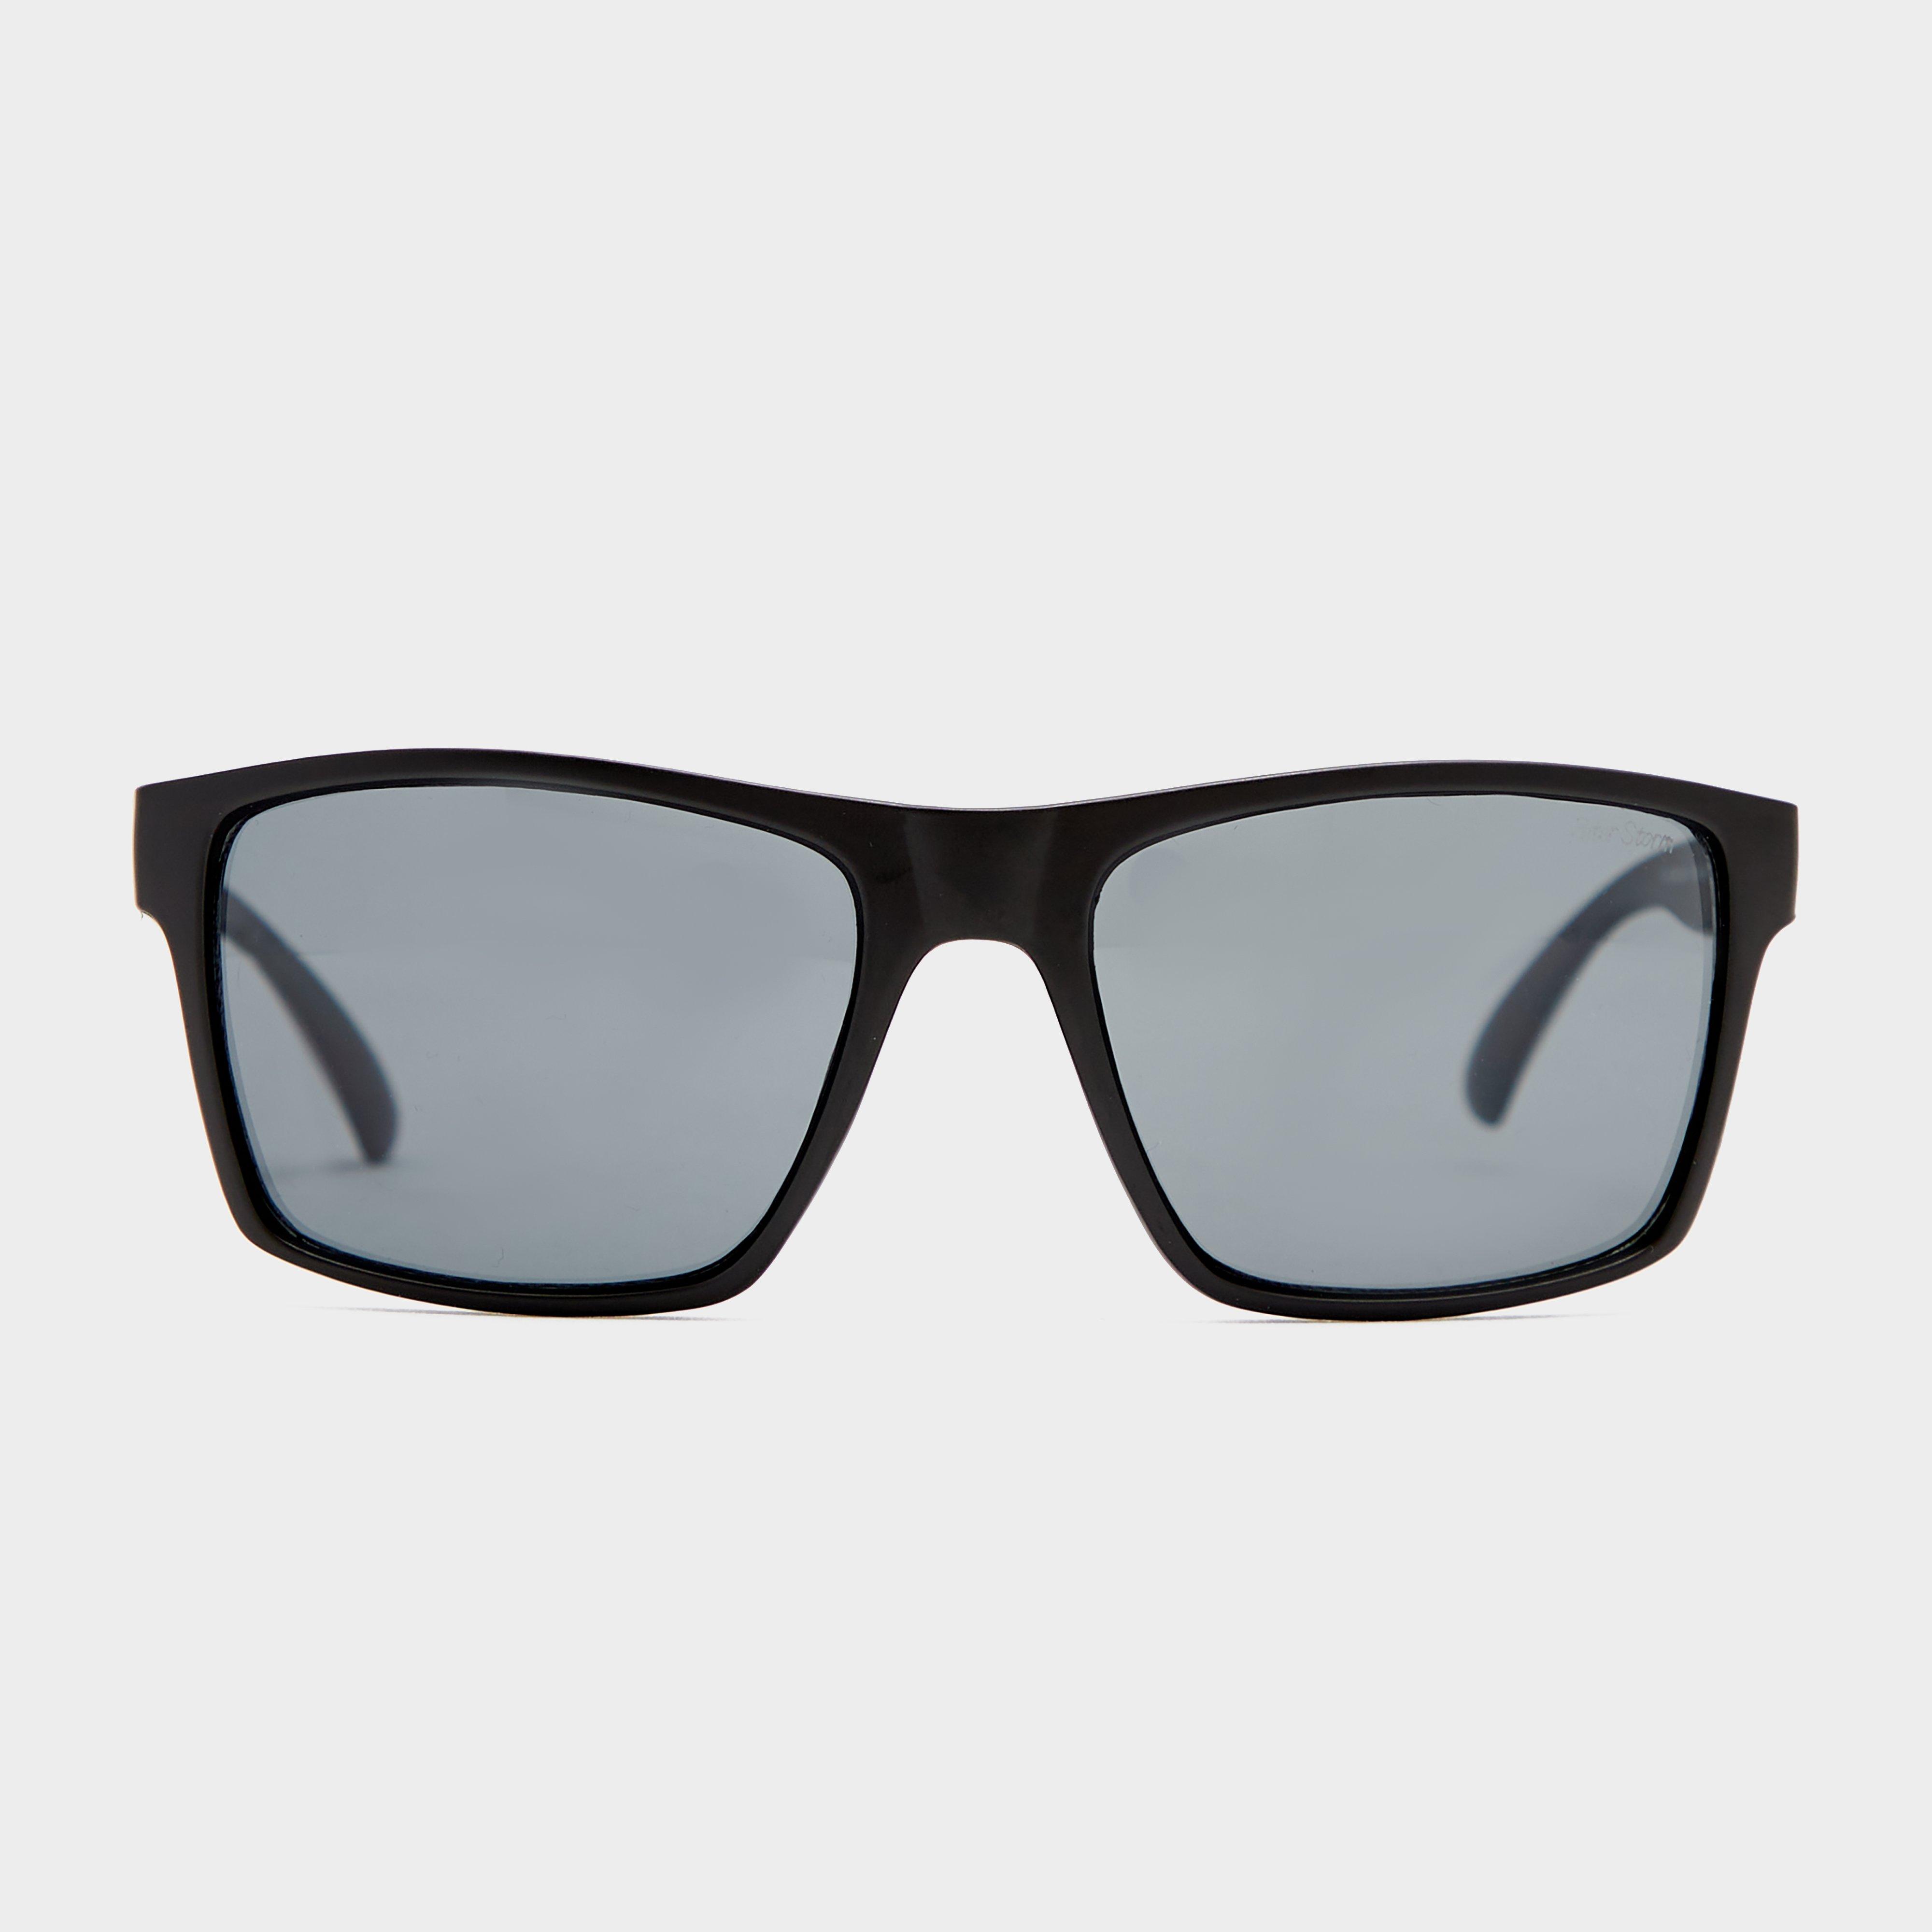 Image of Peter Storm Newquay Sunglasses - Blk/Dgy, BLK/DGY